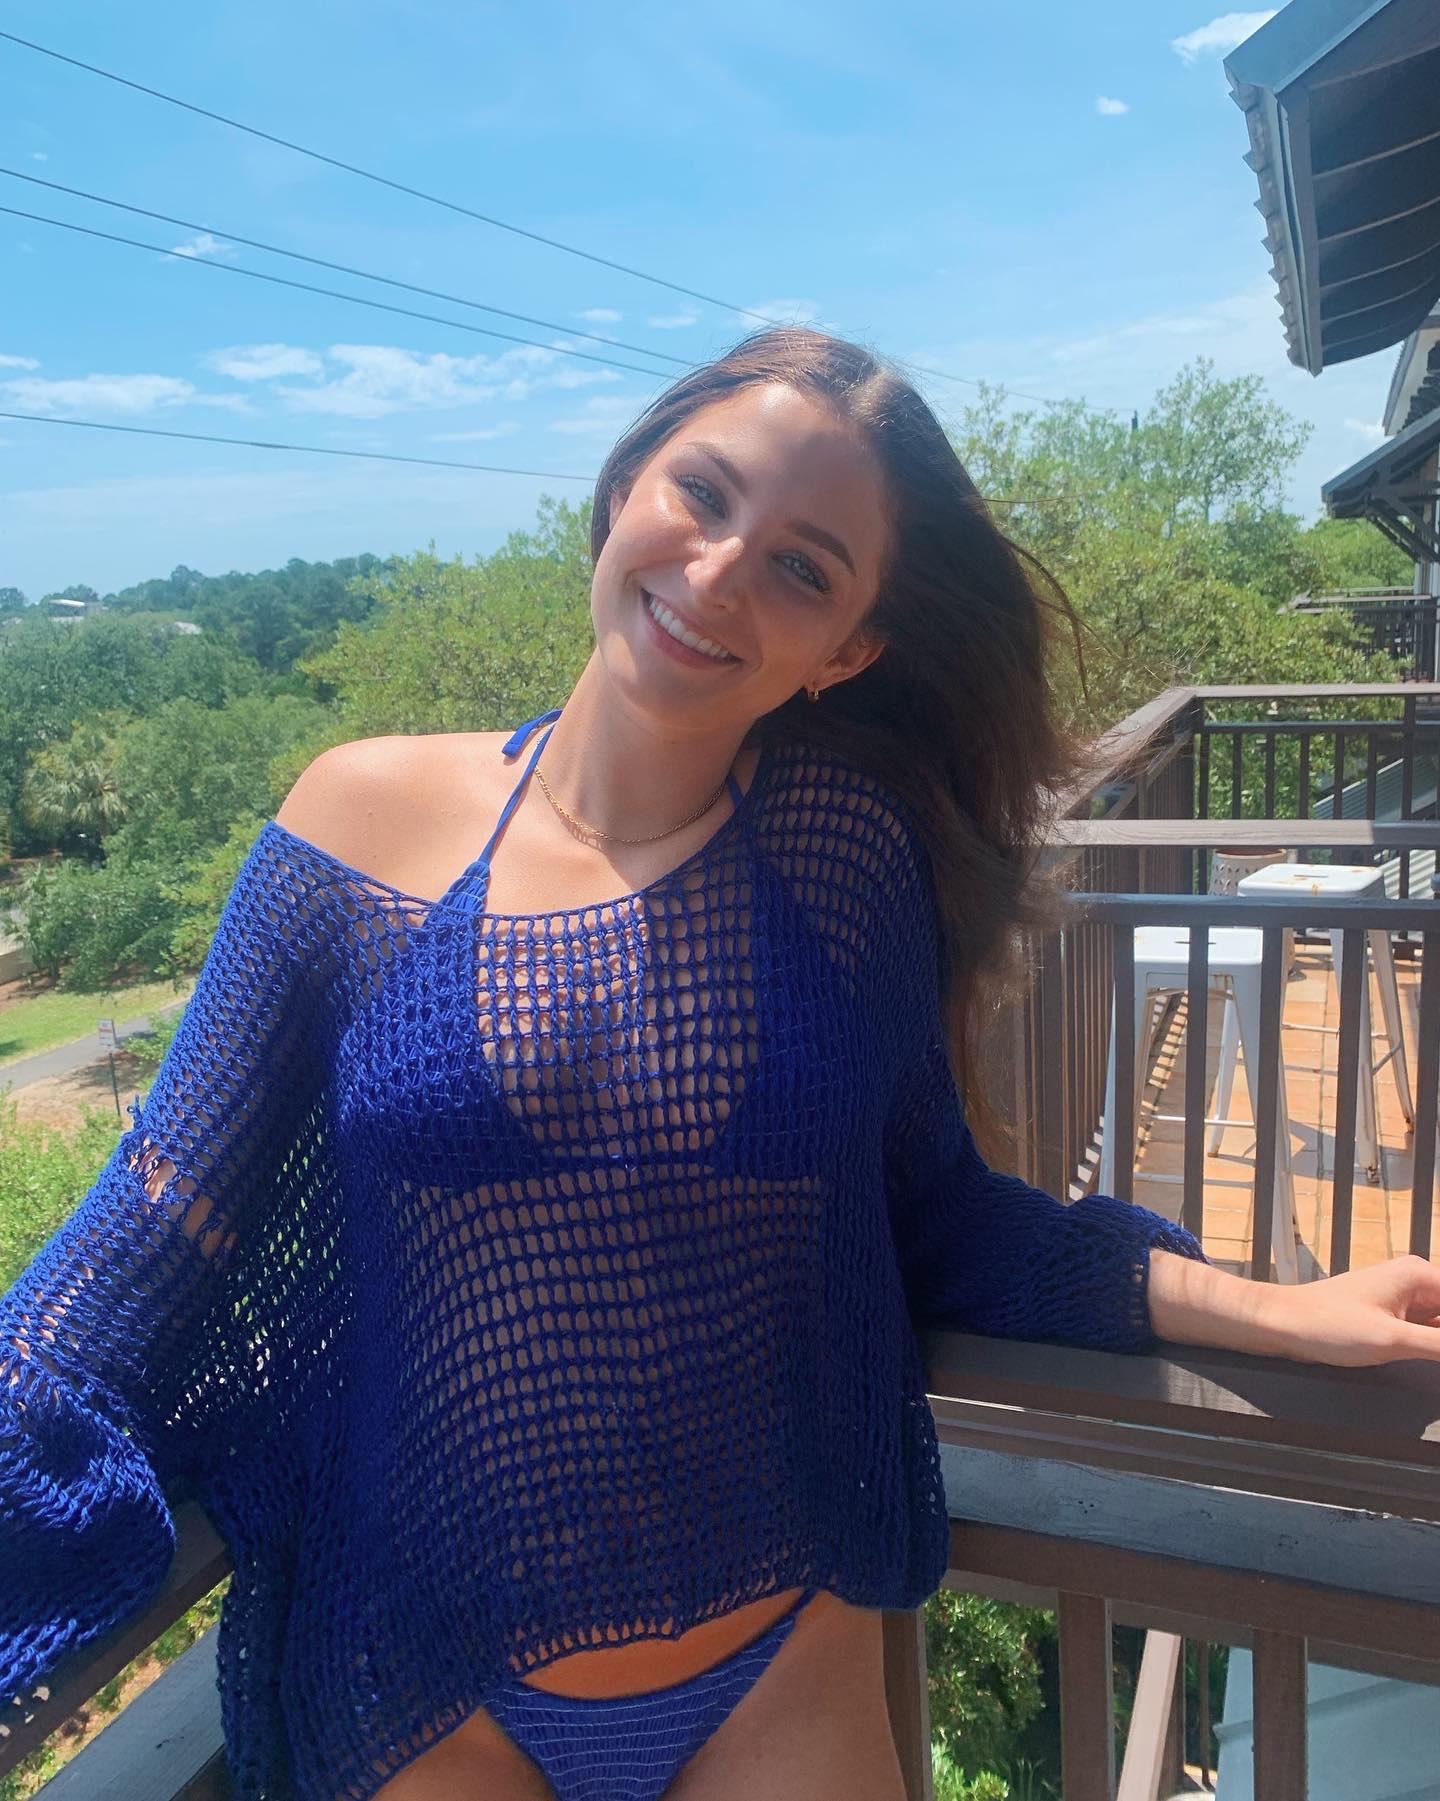 Volleyball Star Mariah Walker Is On The Balcony In Her Blue Bikini